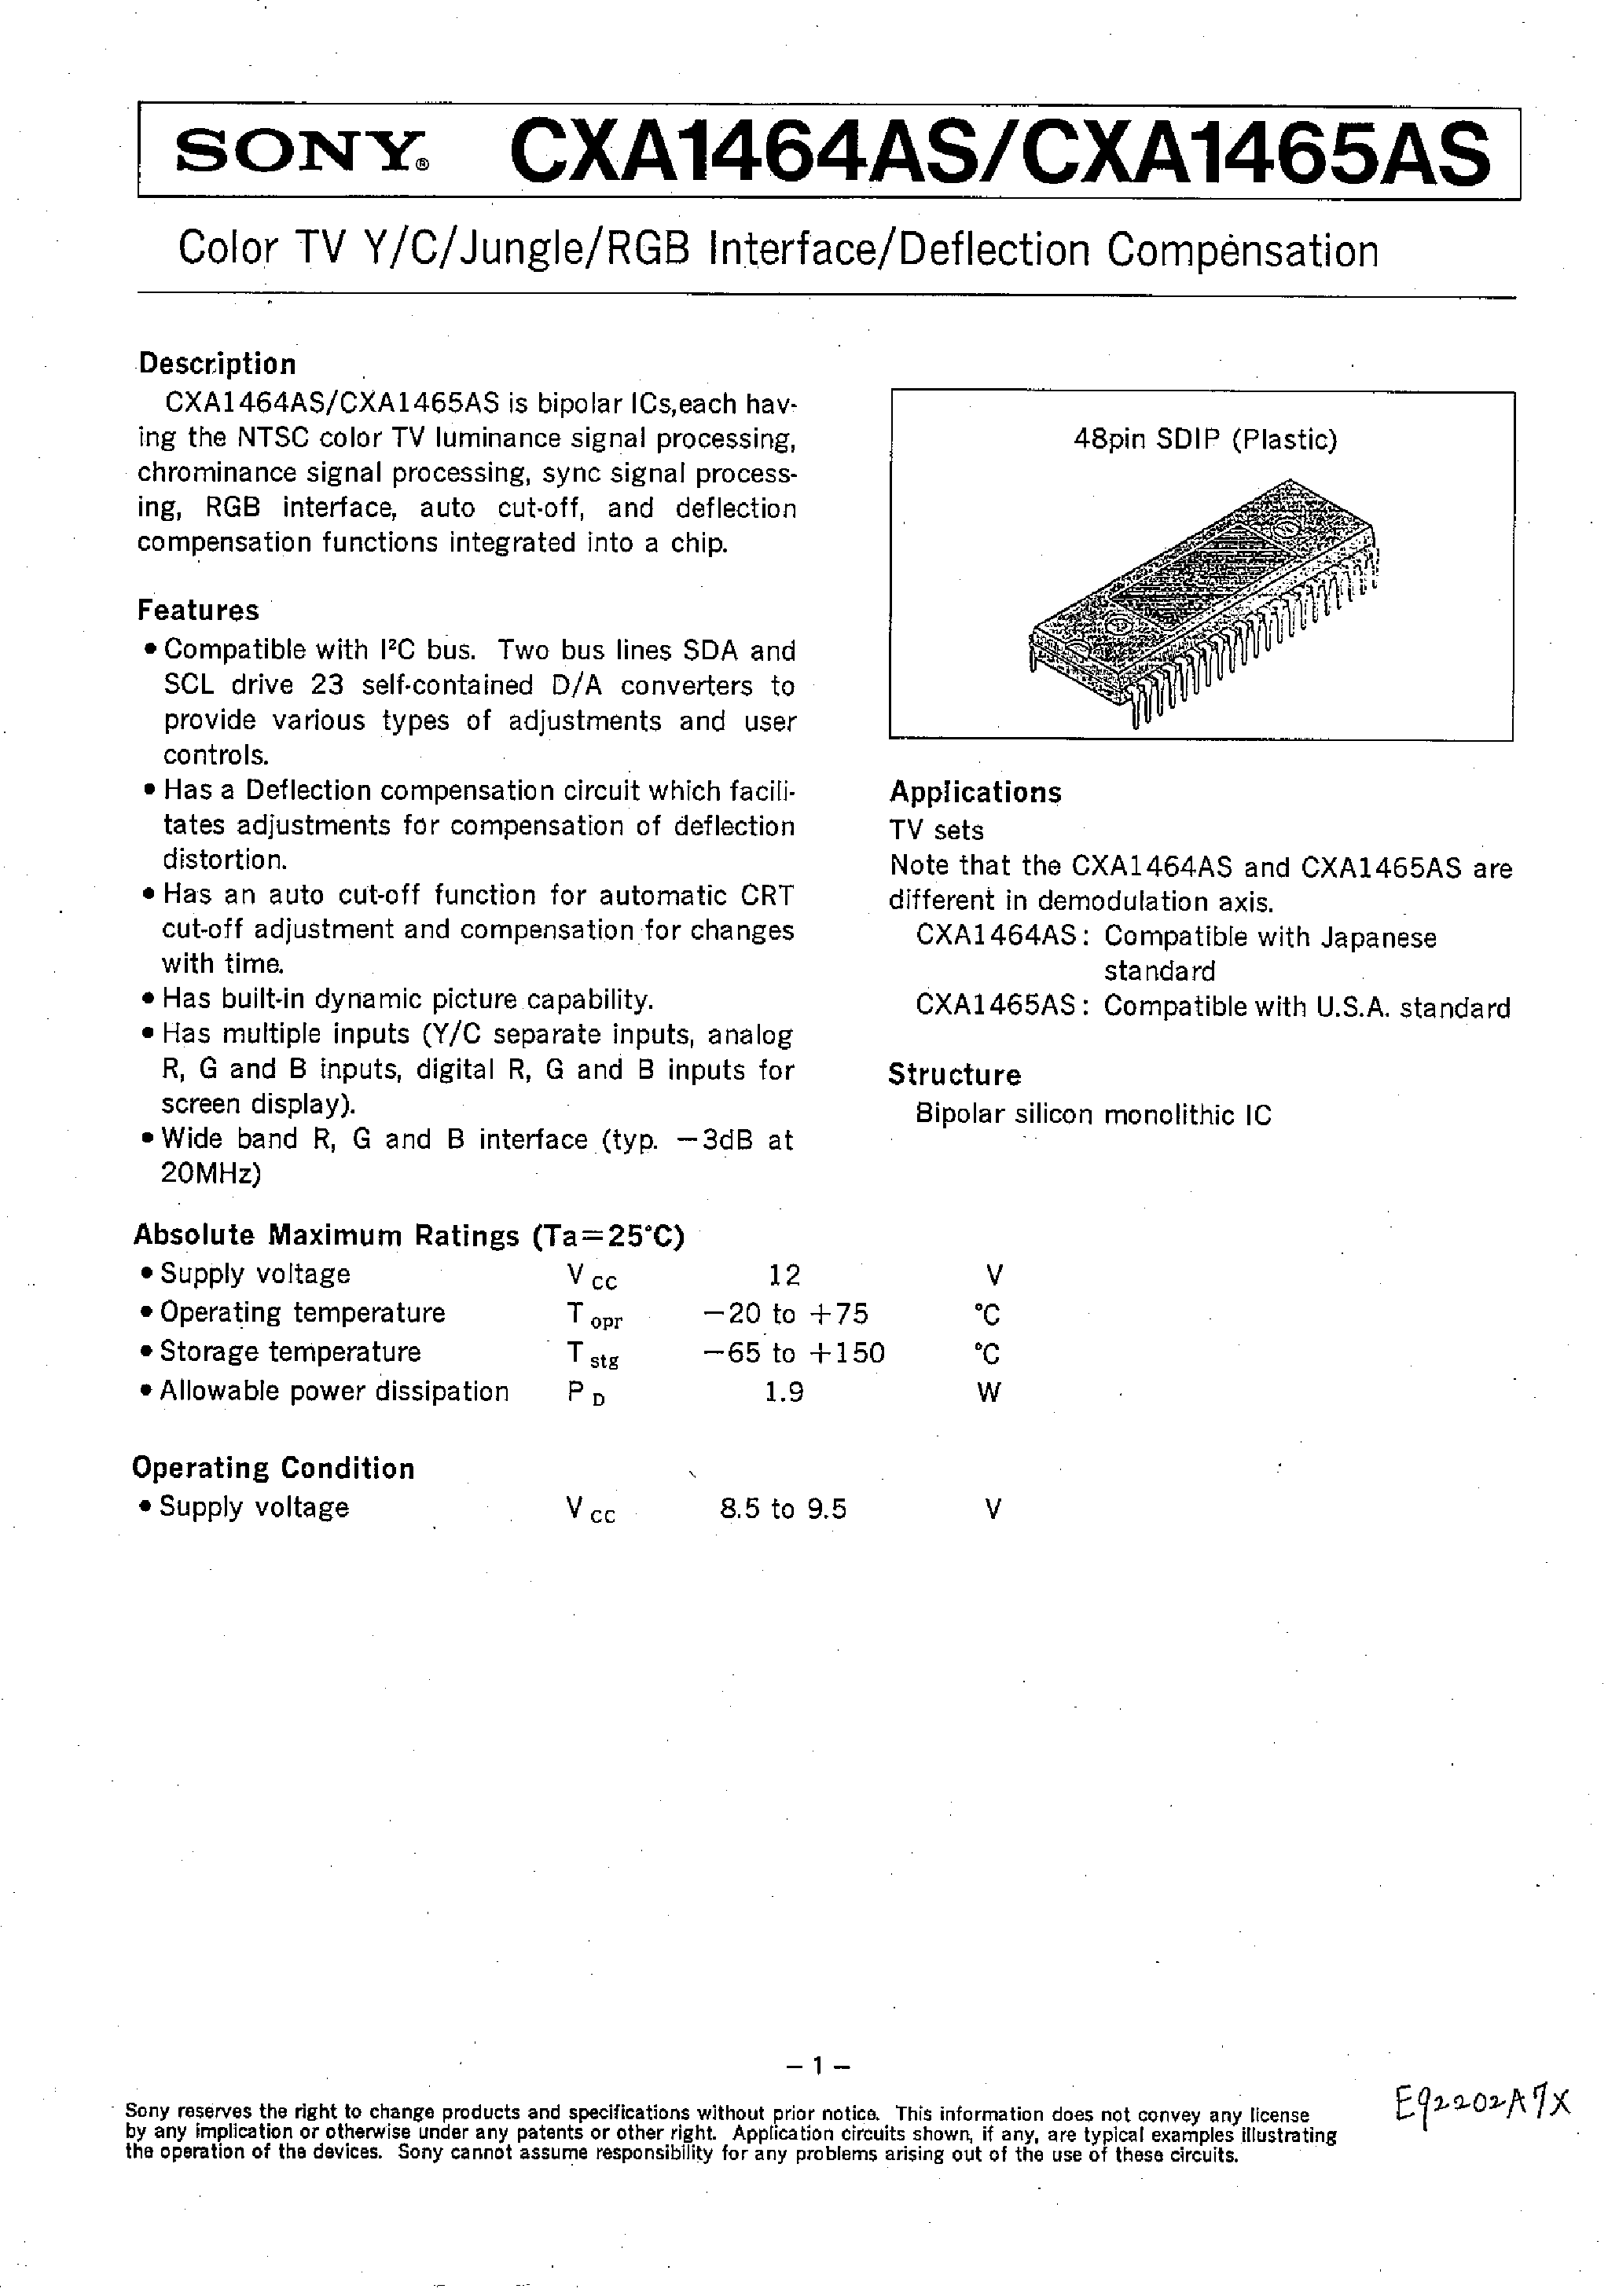 Даташит CXA1464AS - (CXA1464AS / CXA1465AS) Color TV Y/C/Jungle/RGB Interface / Deflection Compensation страница 1